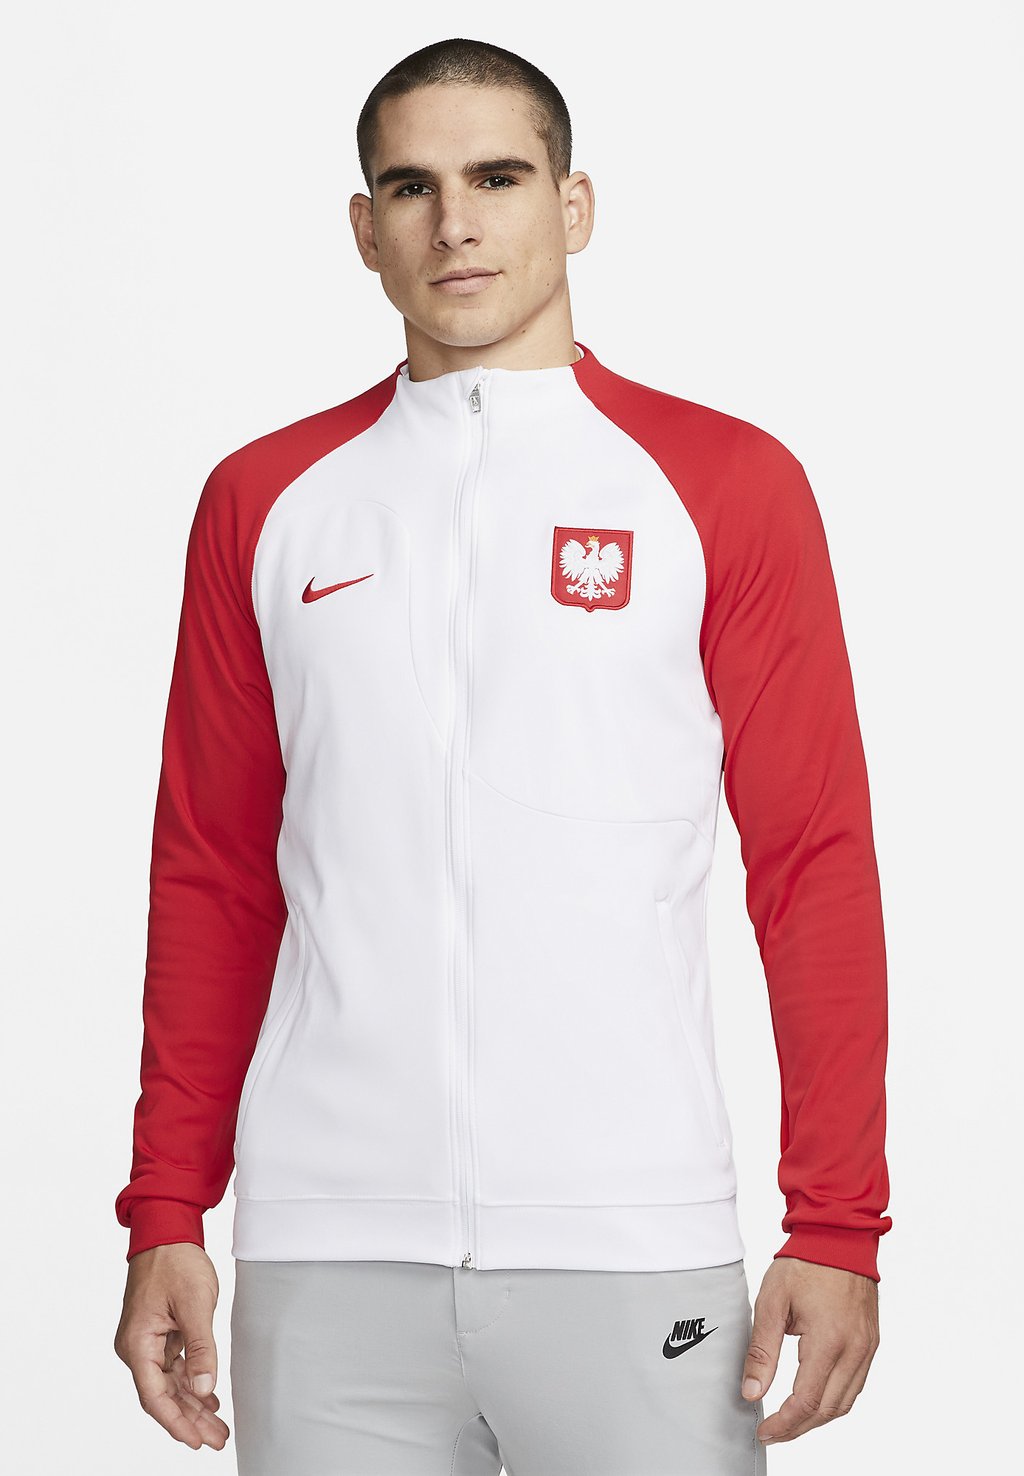 Найк Польша. Nike poland